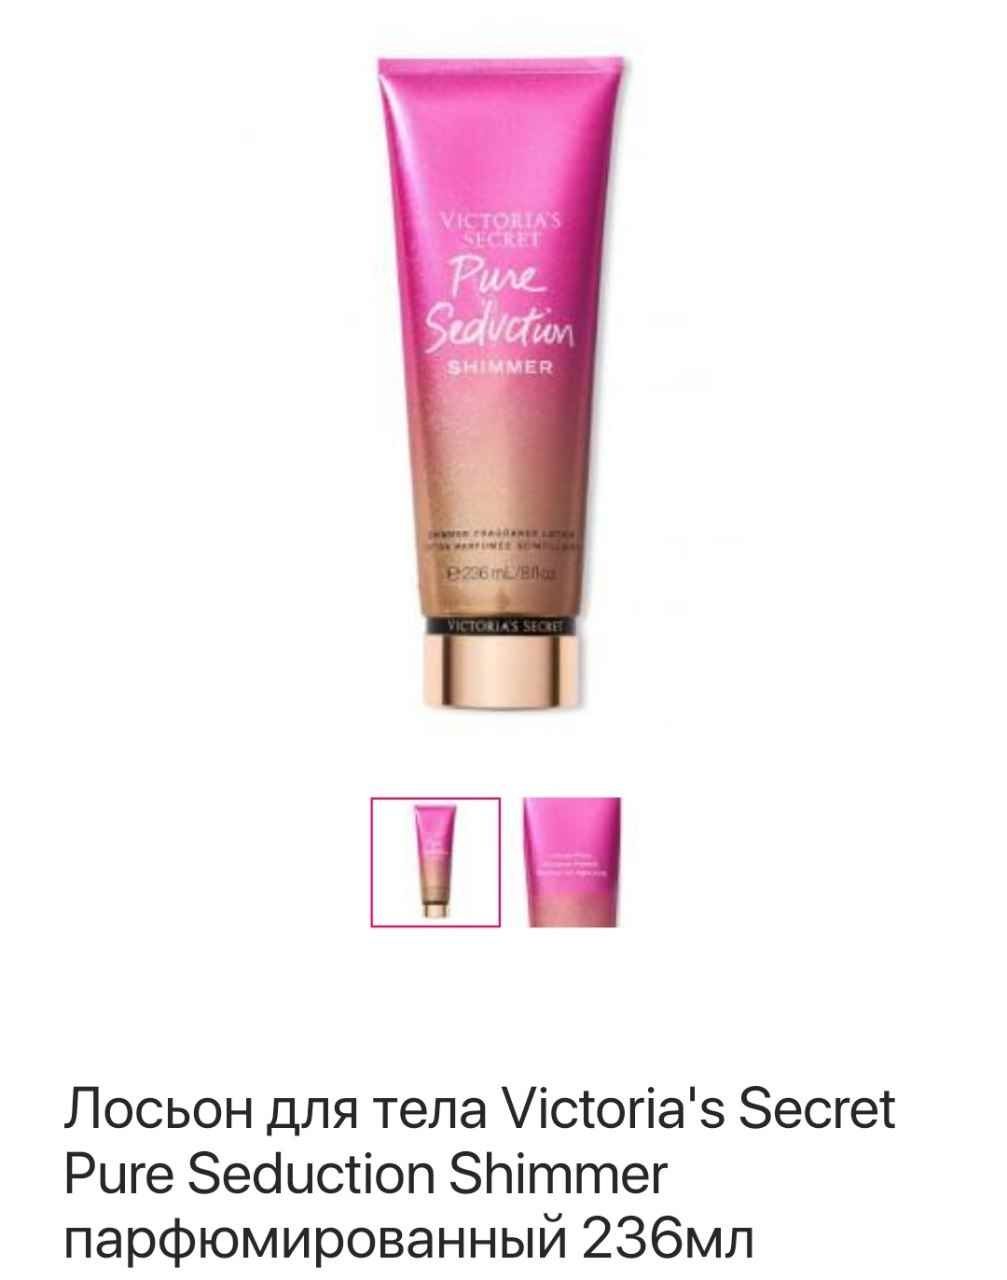 Victoria's secret 100% оригинал